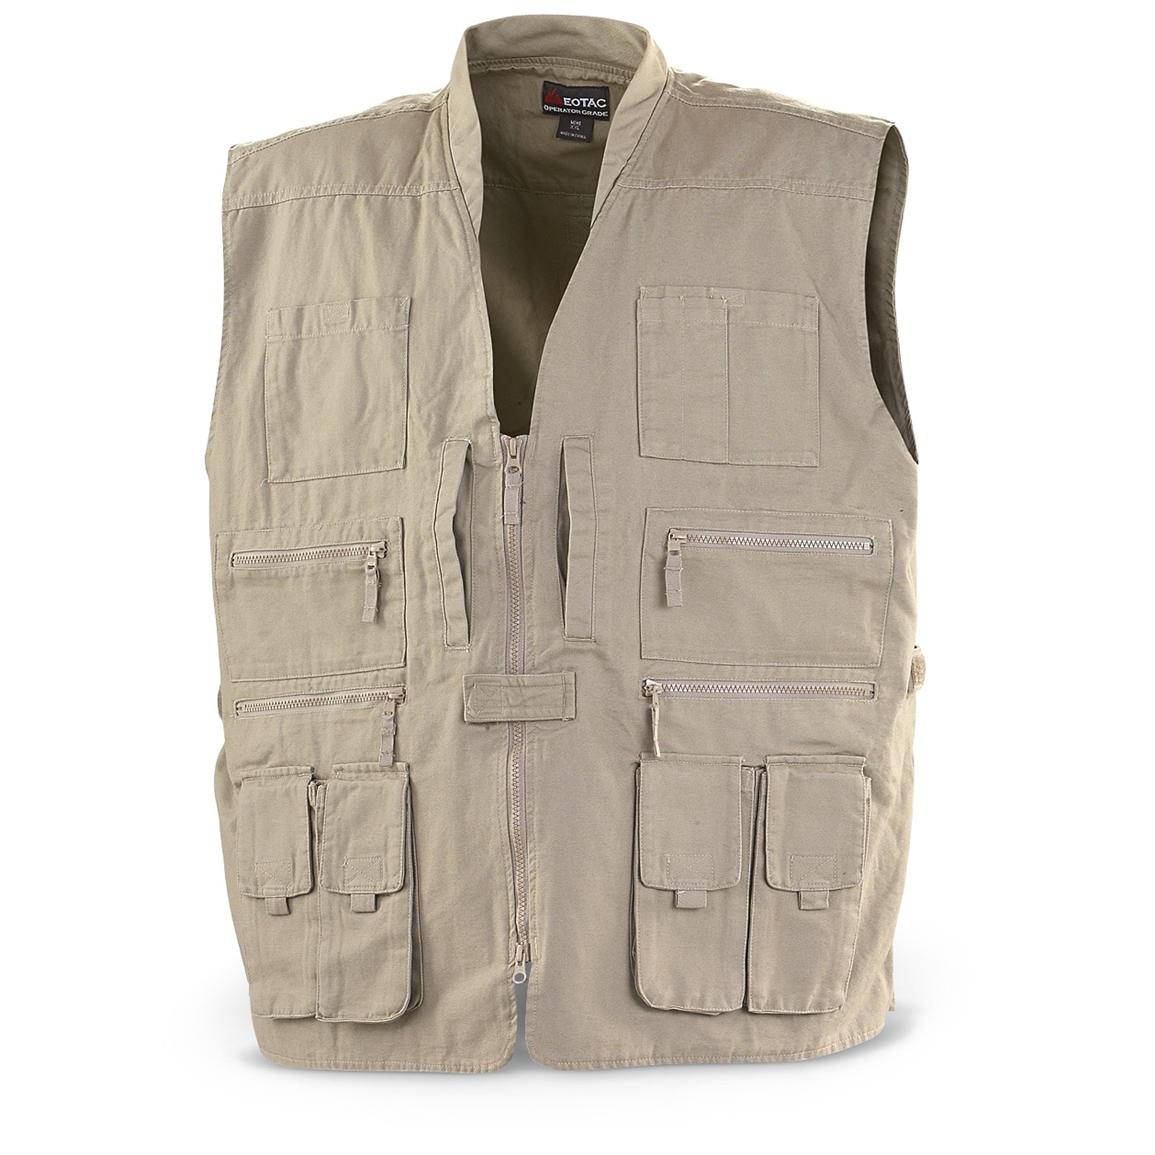 EOTAC™ Operator Grade Tactical Vest - 204196, Tactical Clothing at ...